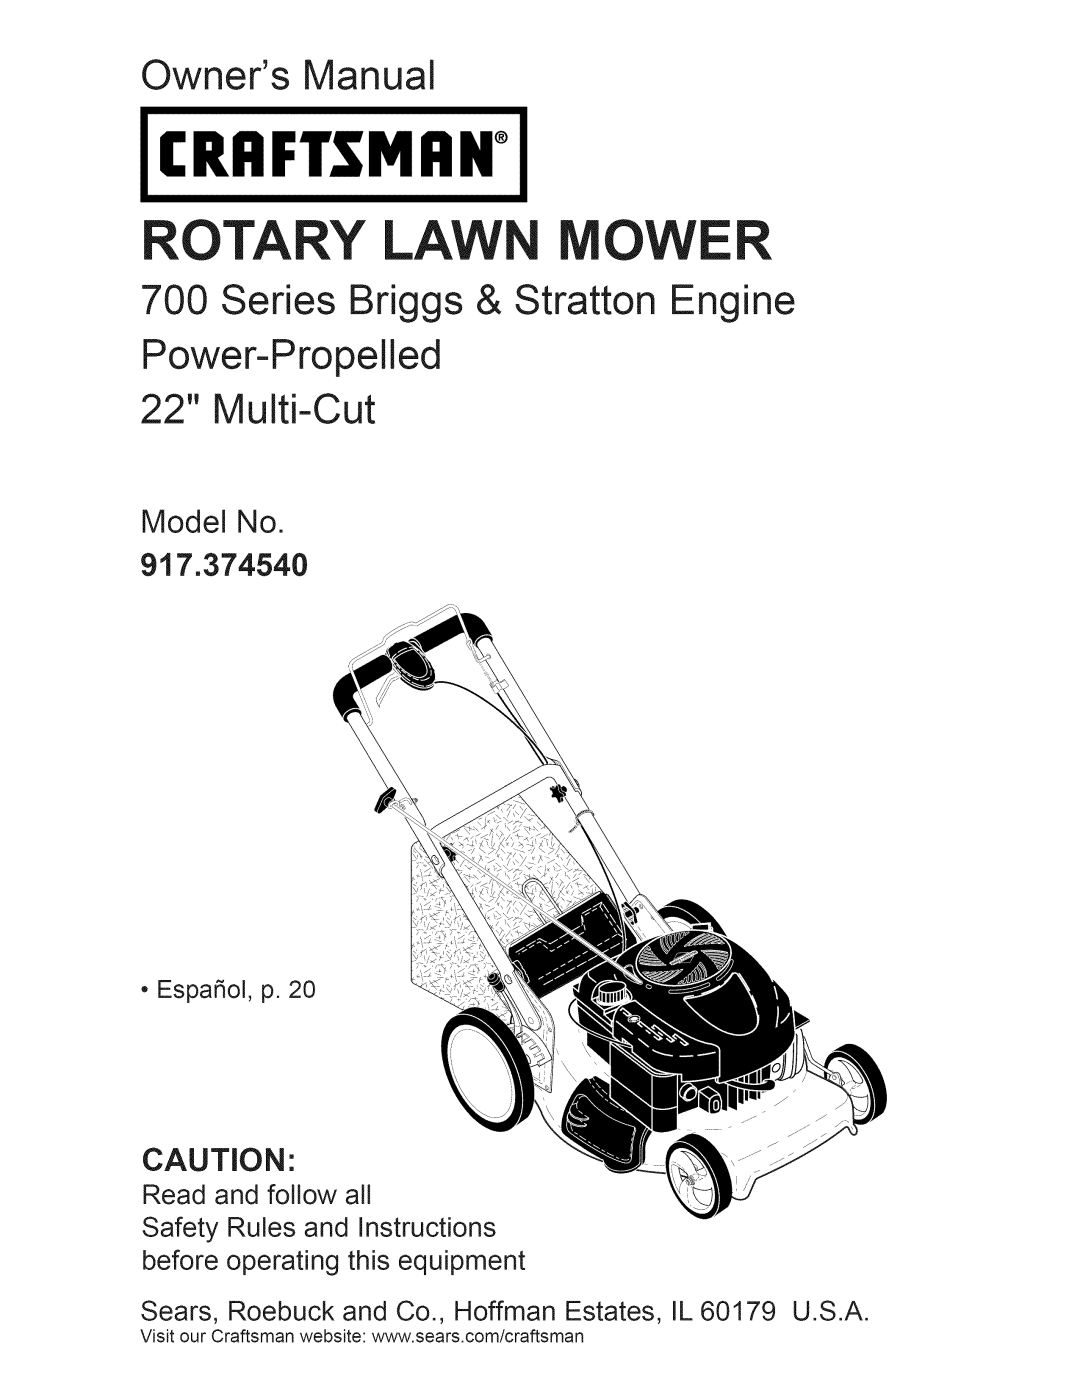 Craftsman owner manual Model No 917.374540, Craftsman, Rotary Lawn Mower, Owners Manual, Power-Propelled 22 Multi-Cut 